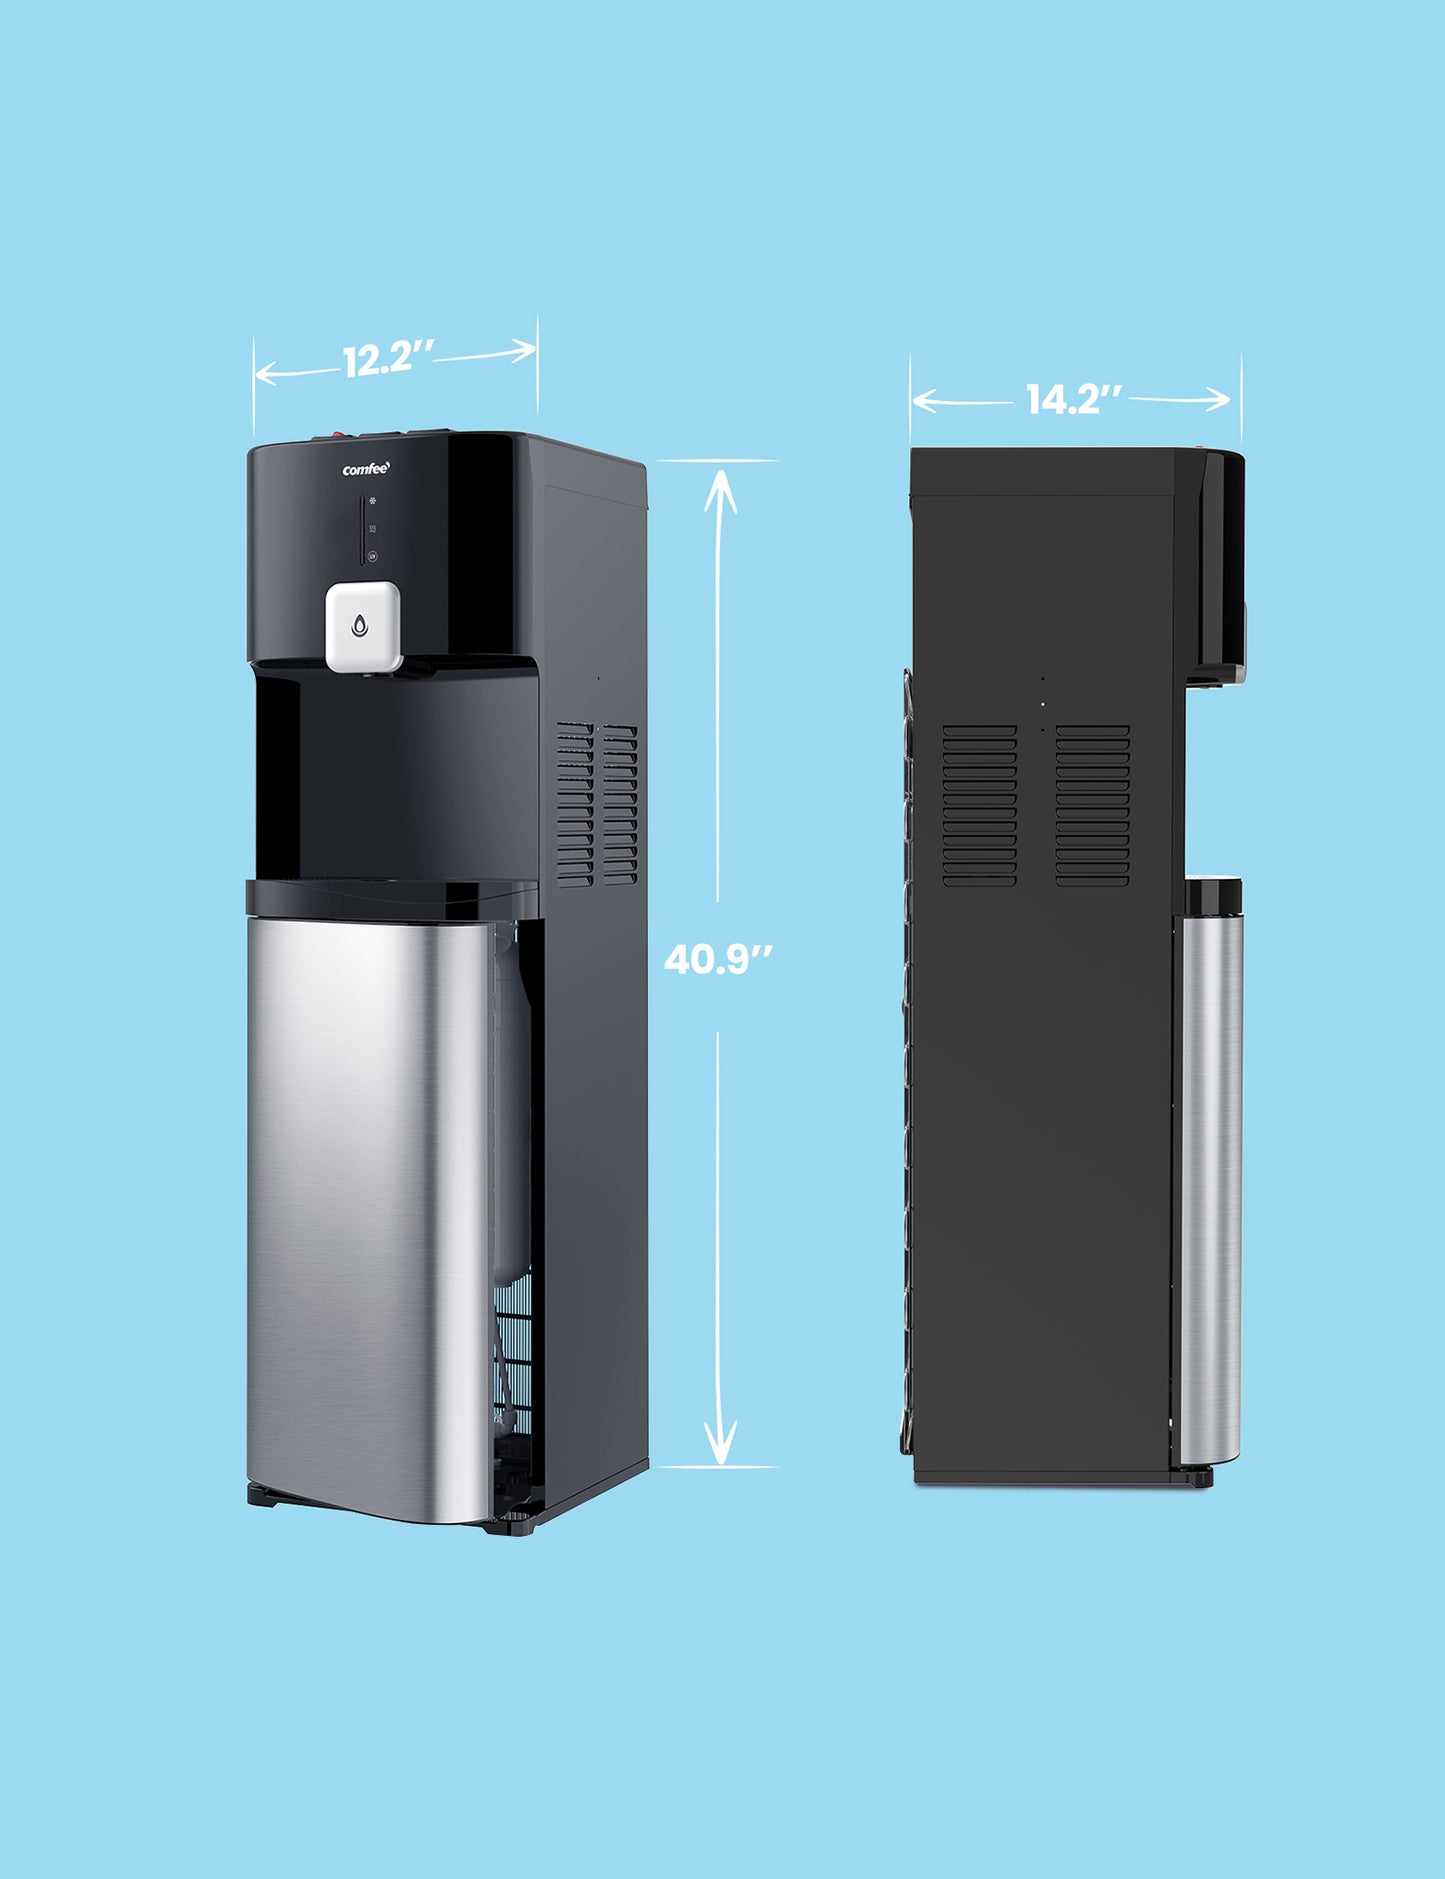 dimensions of water dispenser